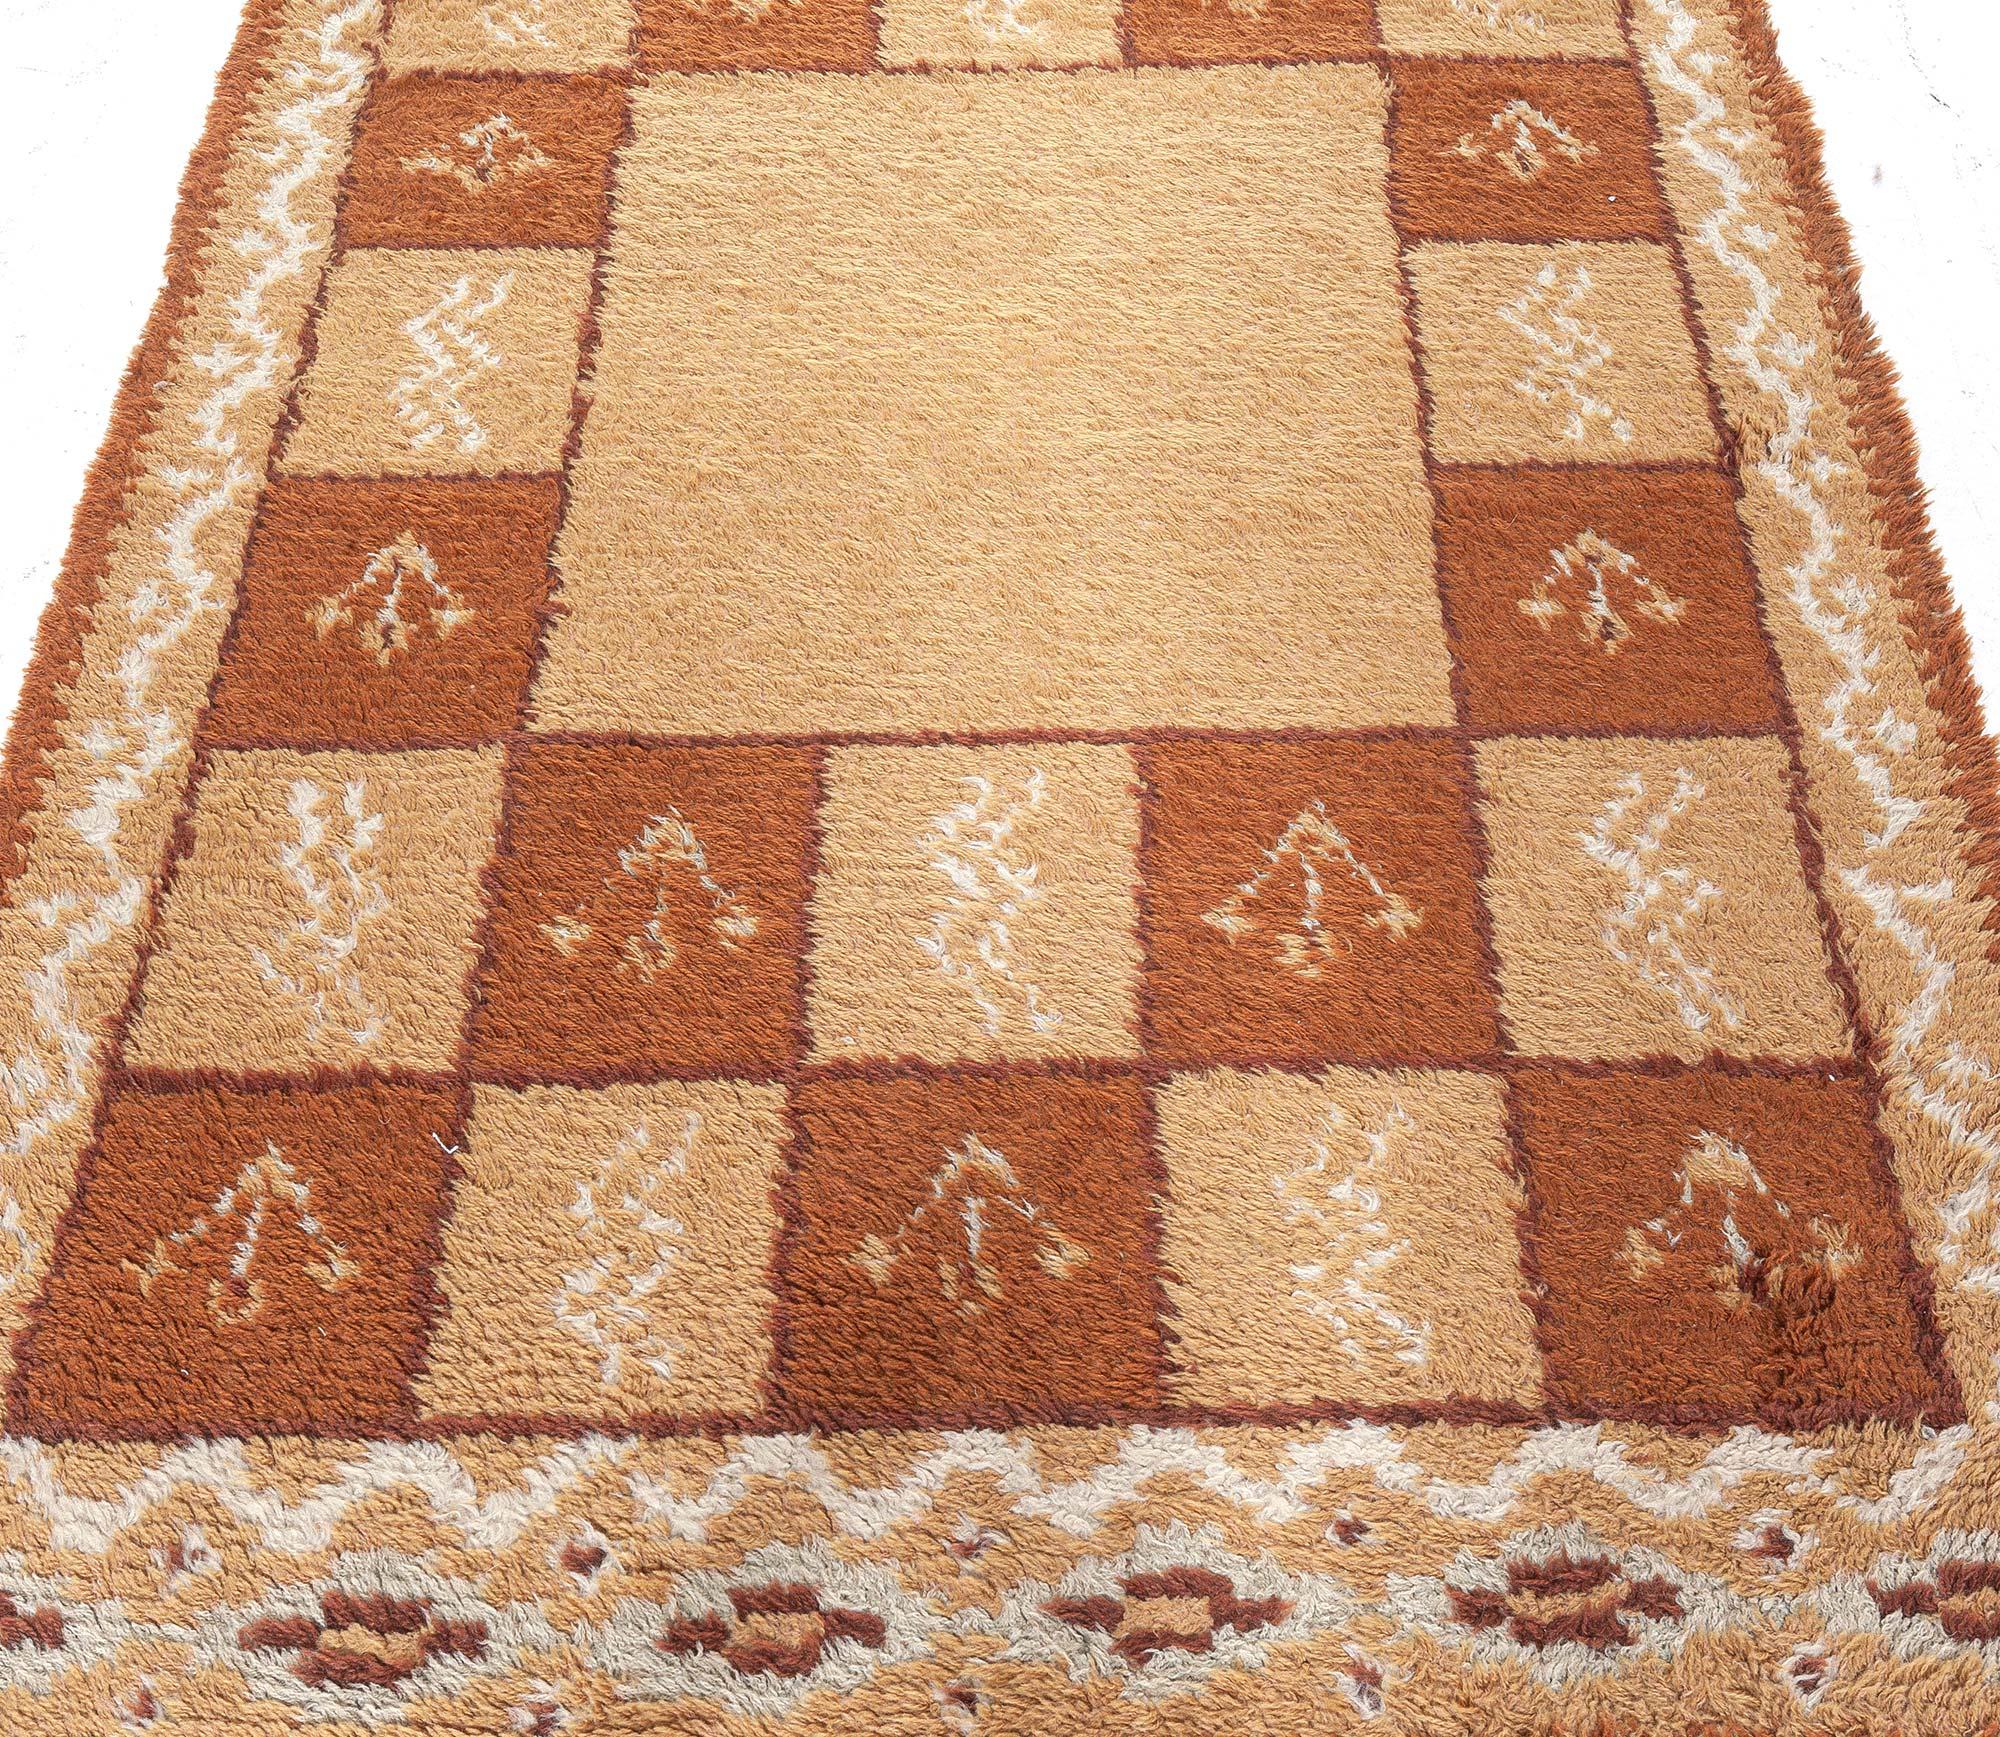 Mid-20th Century Swedish Beige and Brown Handmade Wool Rug
Size: 3'0